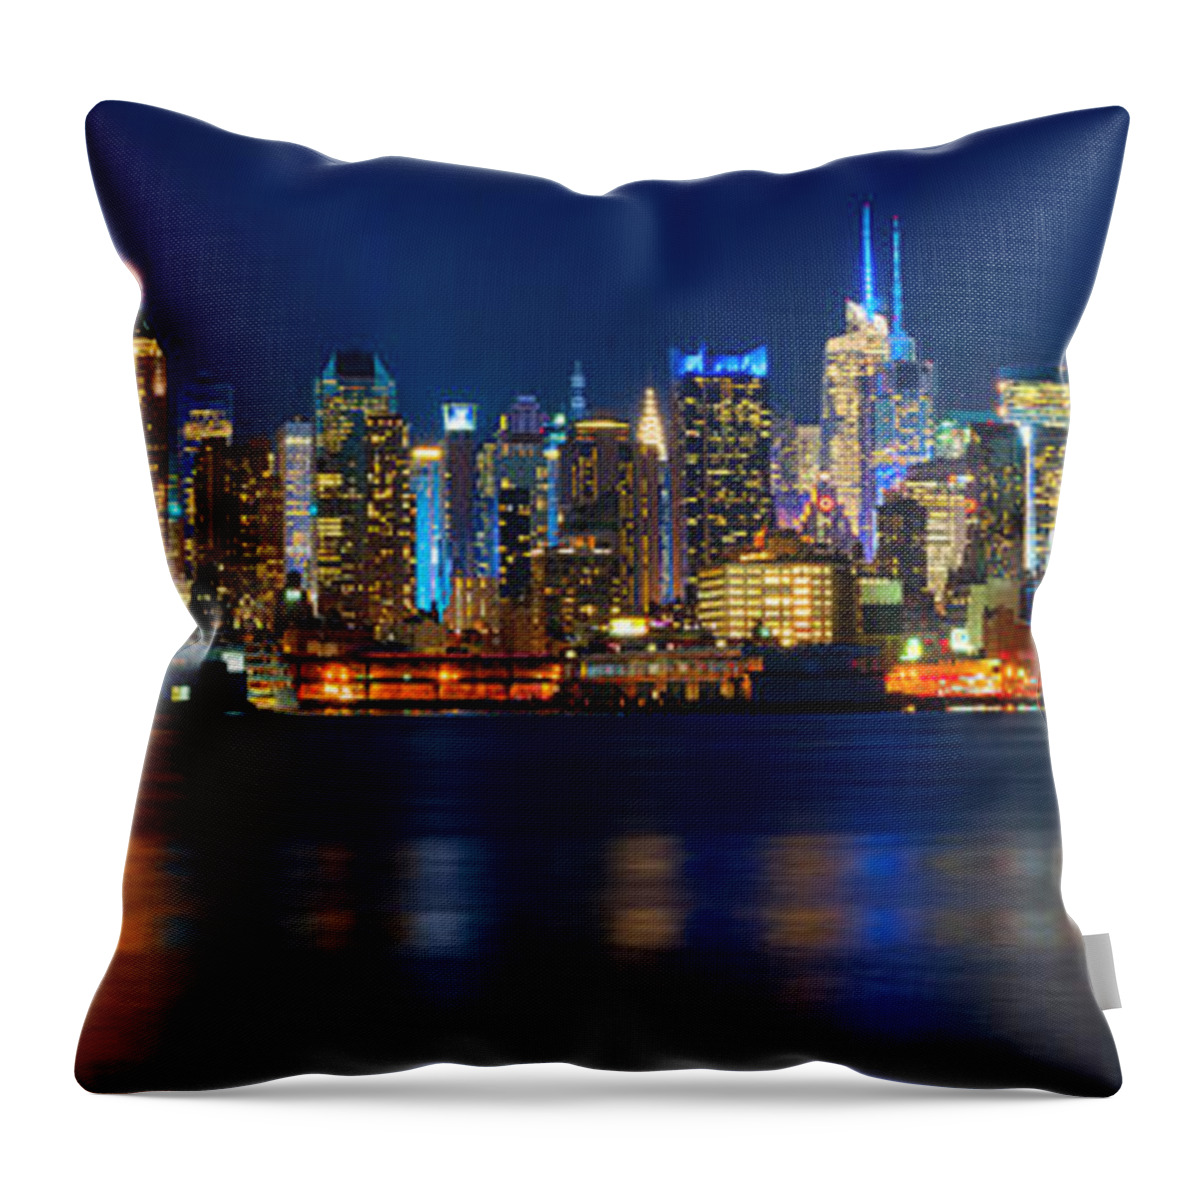 Best New York Skyline Photos Throw Pillow featuring the photograph Amazing New York Skyline Panorama by Mitchell R Grosky